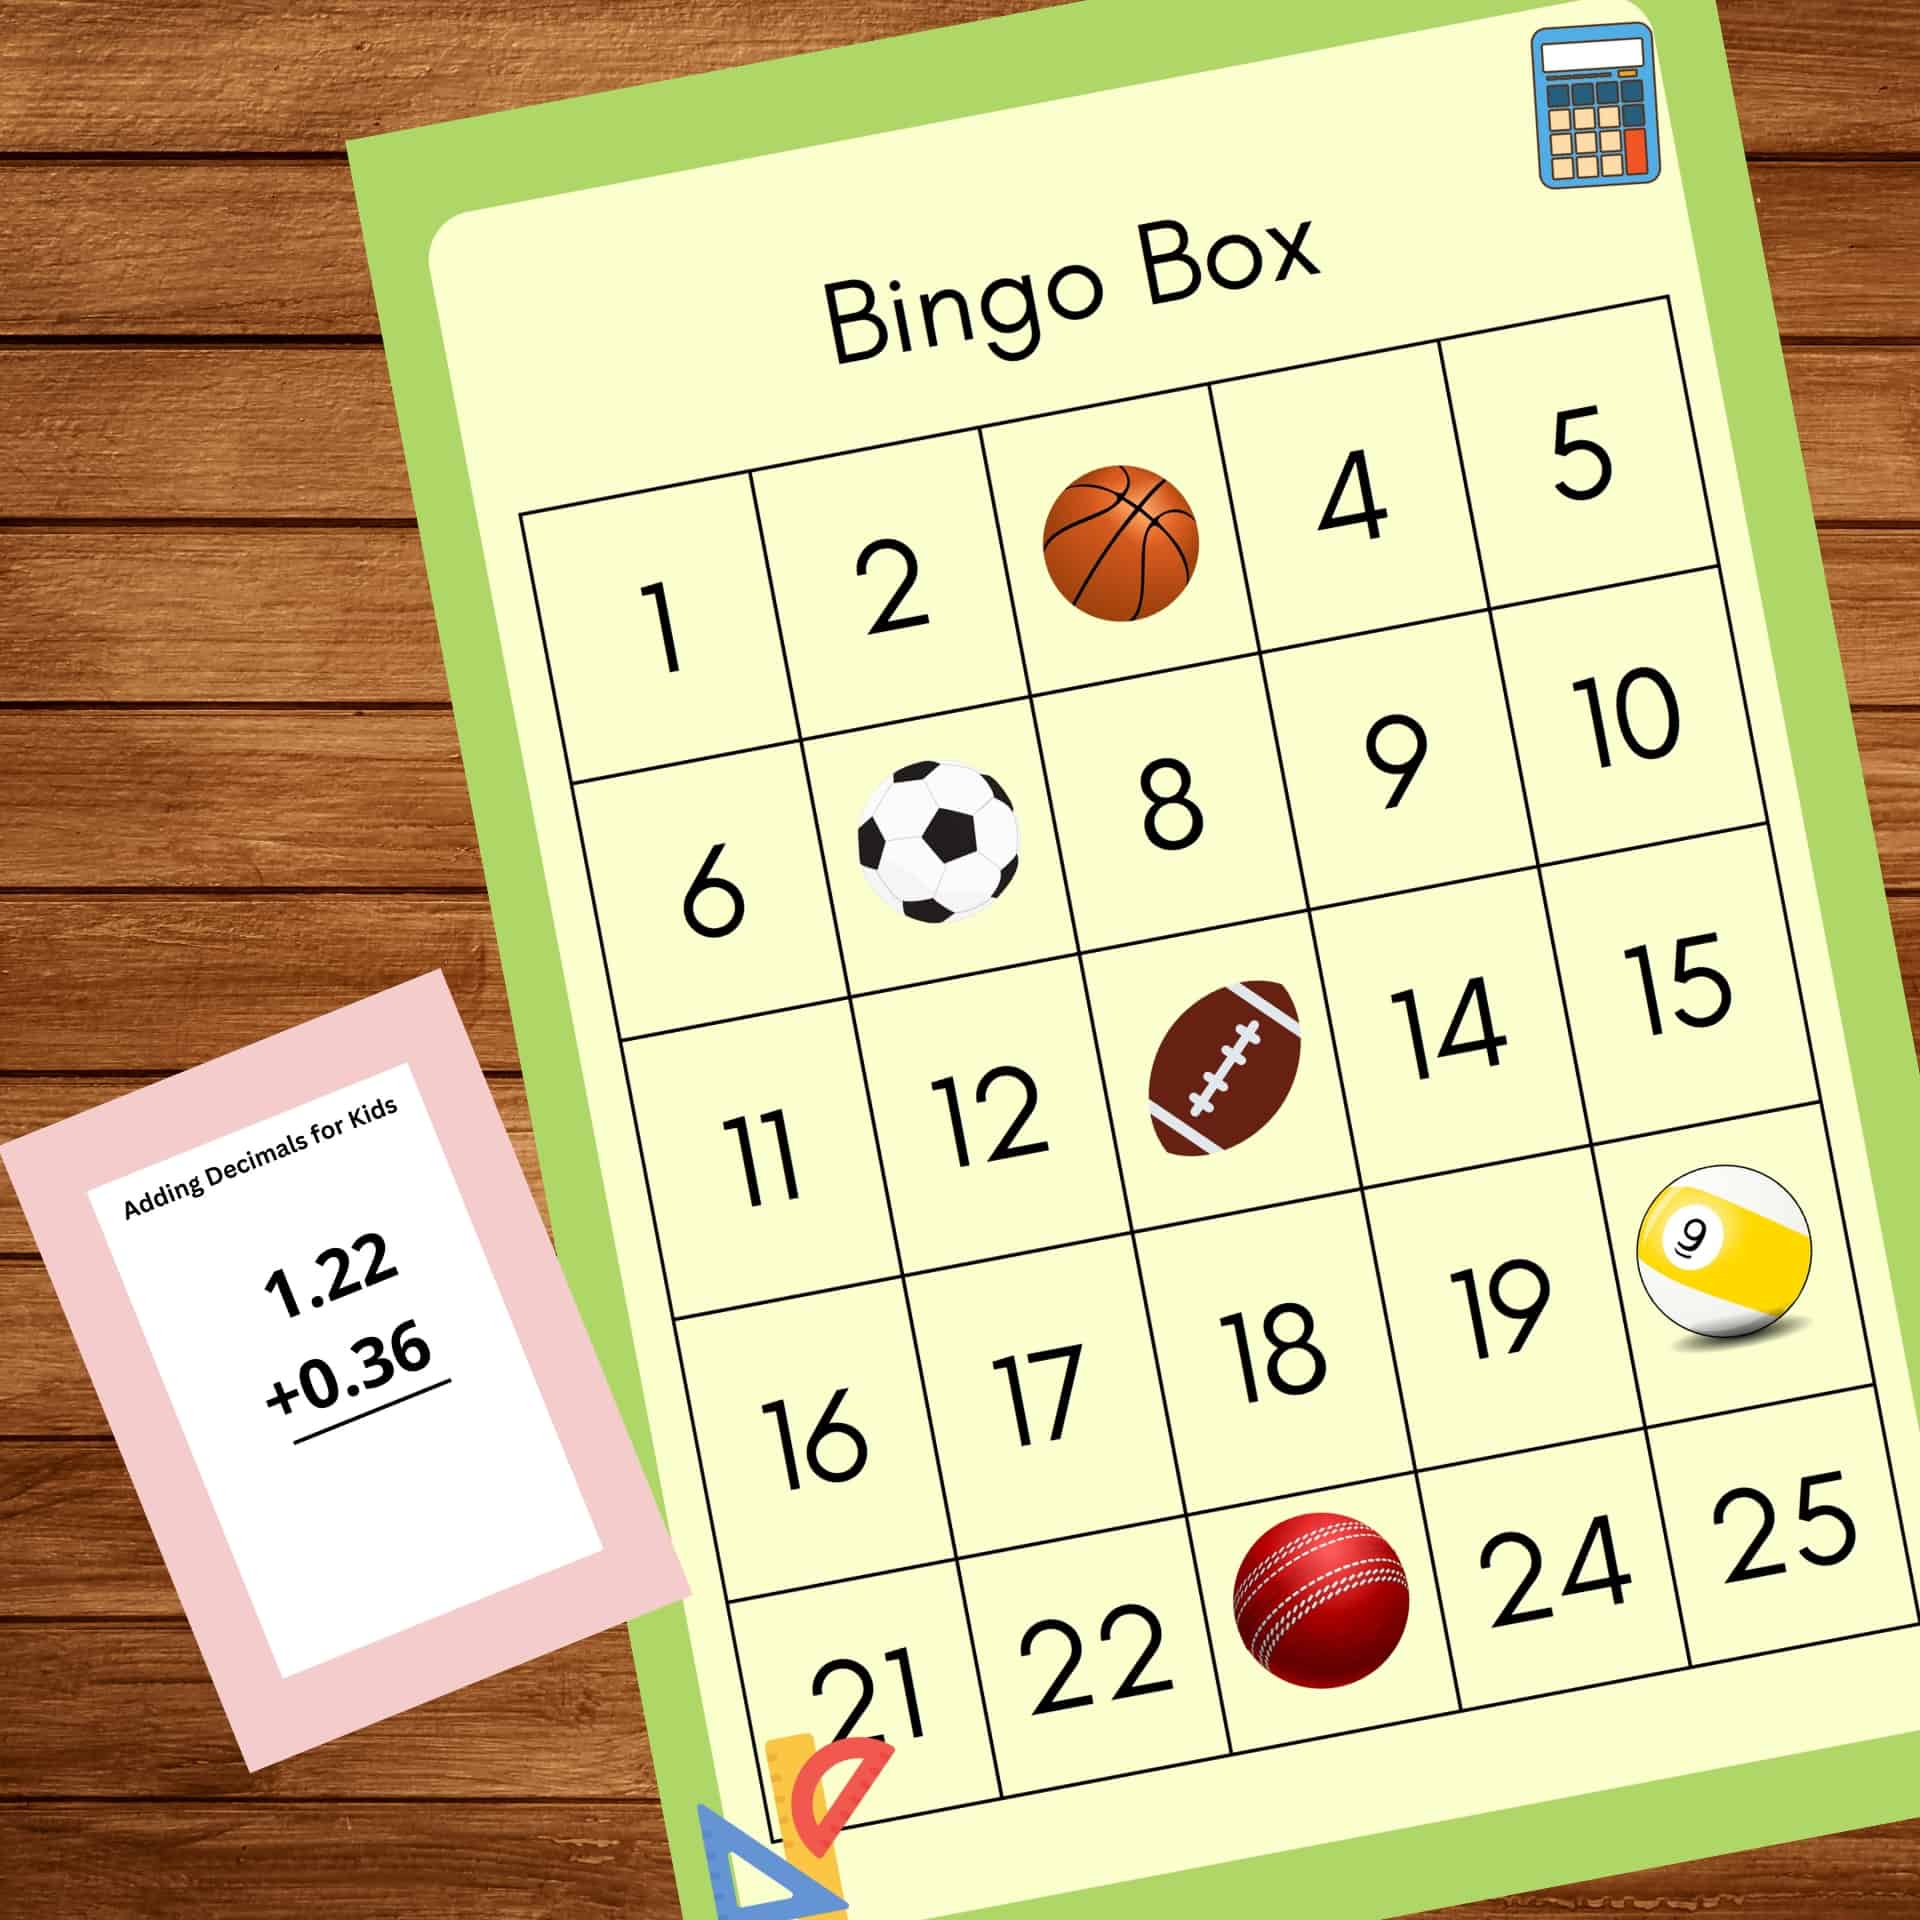 Bingo Box with a decimal cards